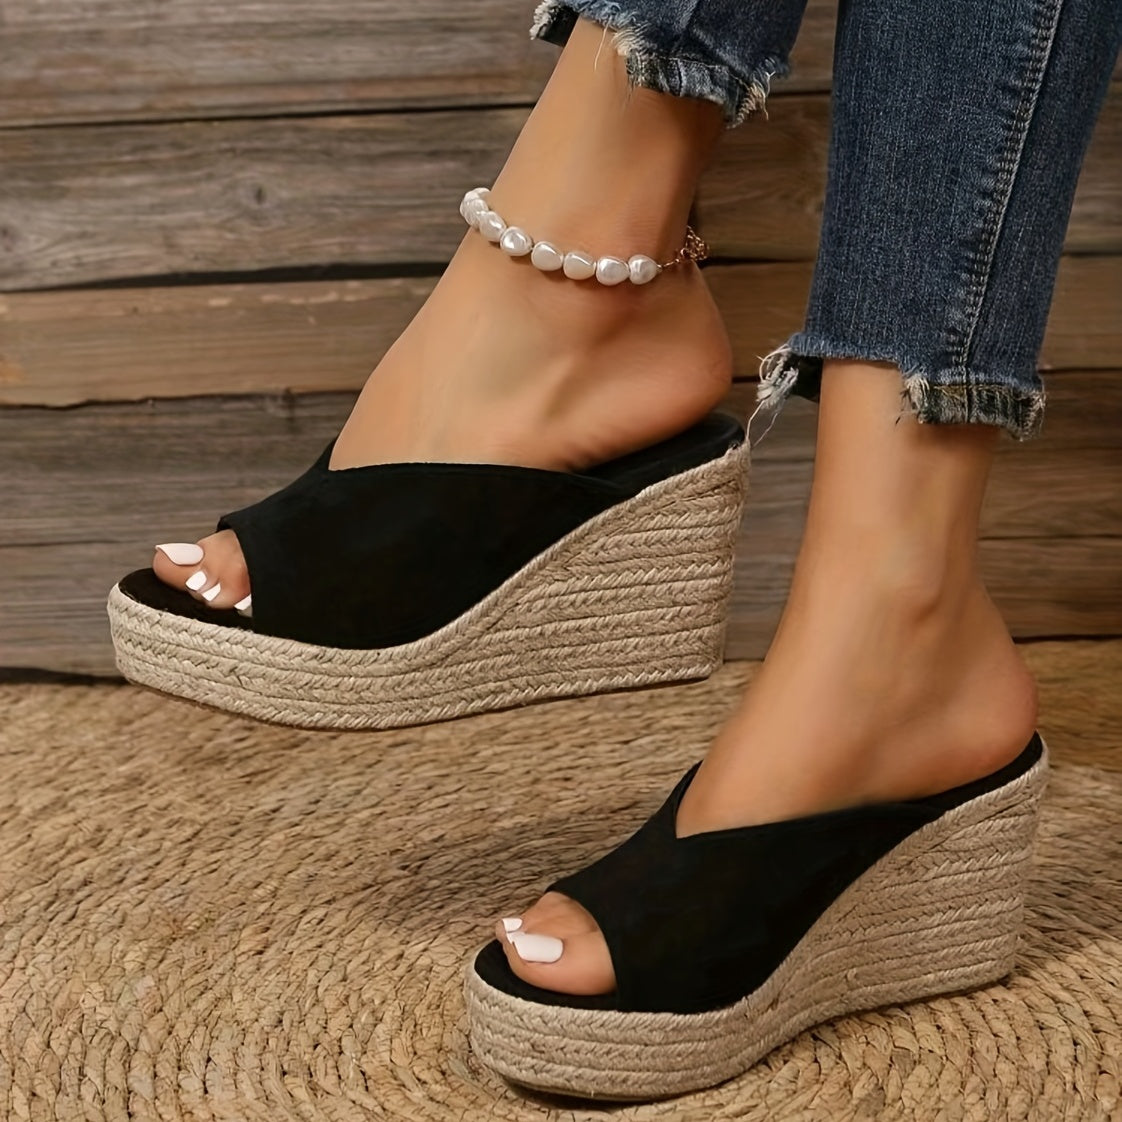 Women's Espadrille Wedge Sandals, Casual Peep Toe Slip On Platform Shoes, Outdoor Slide Sandals